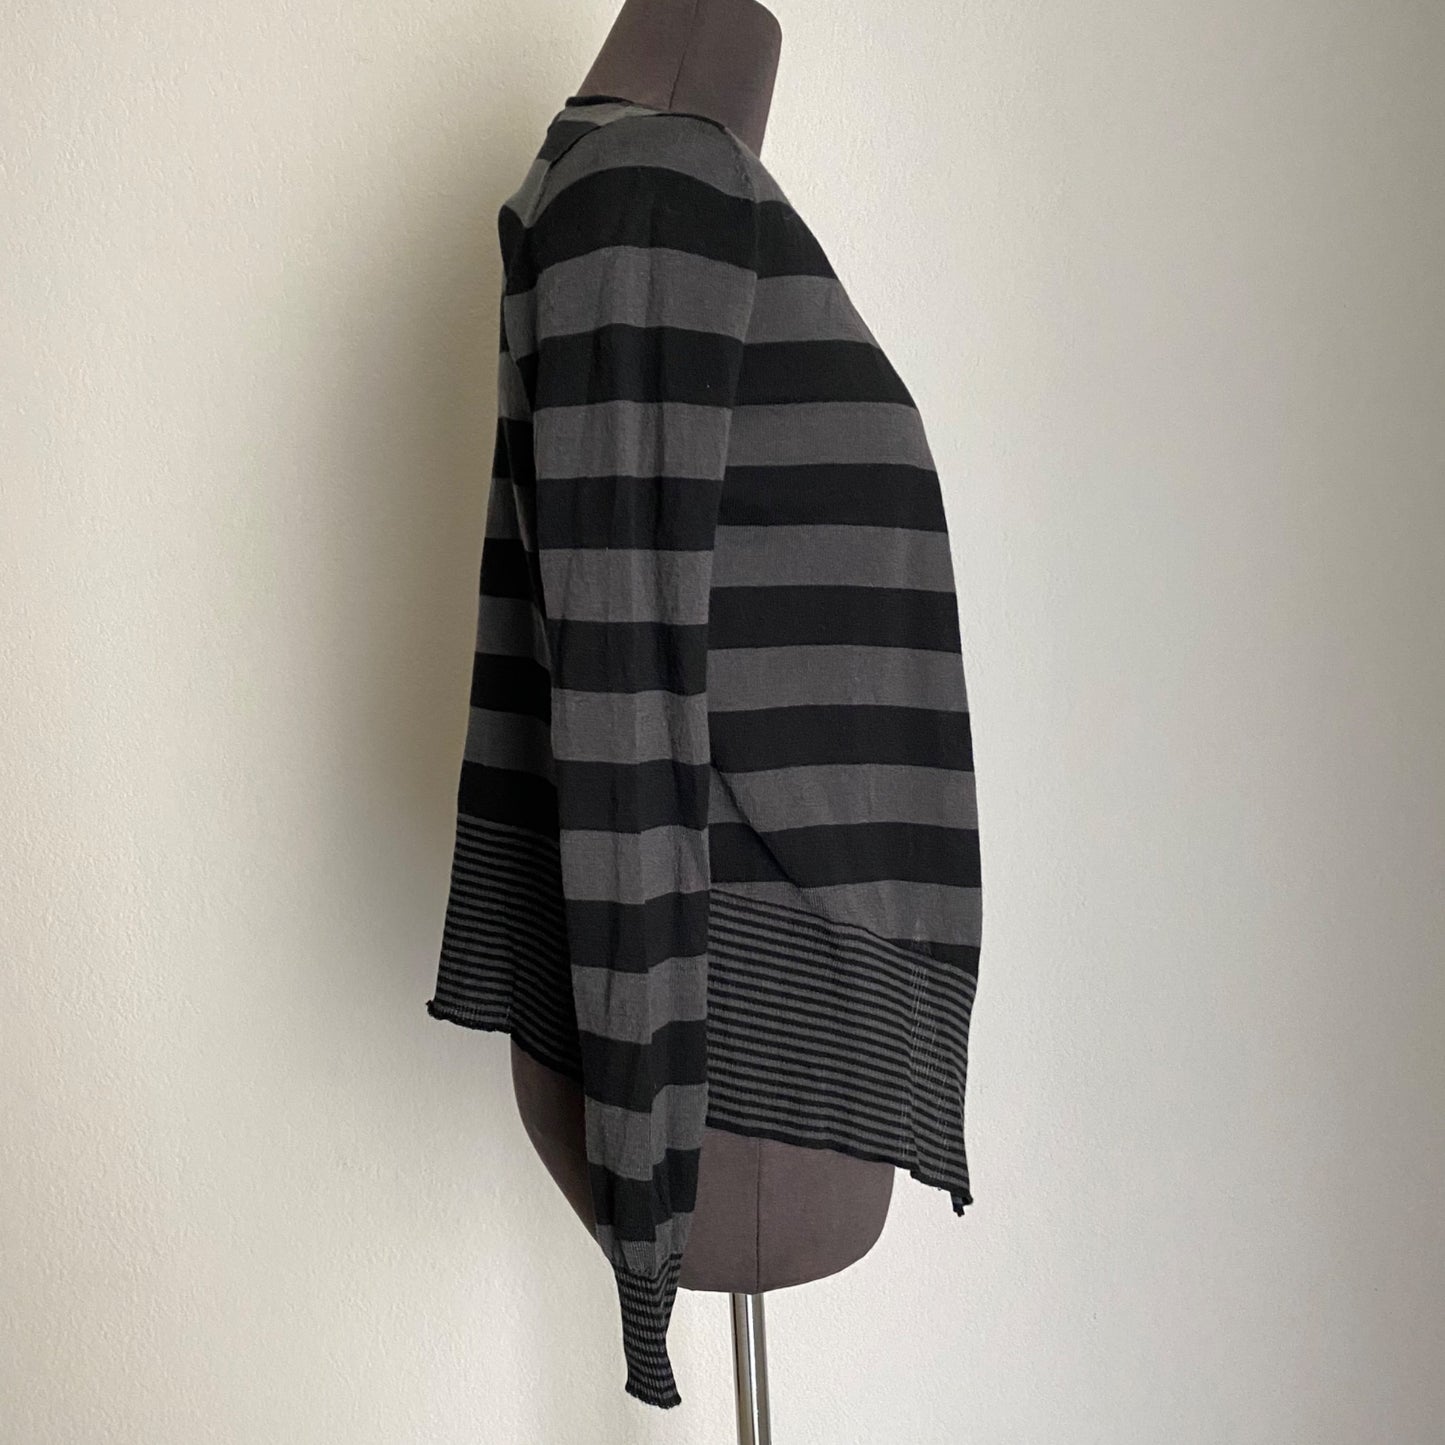 Billabong sz S cotton Long sleeve stripe open knit cardigan